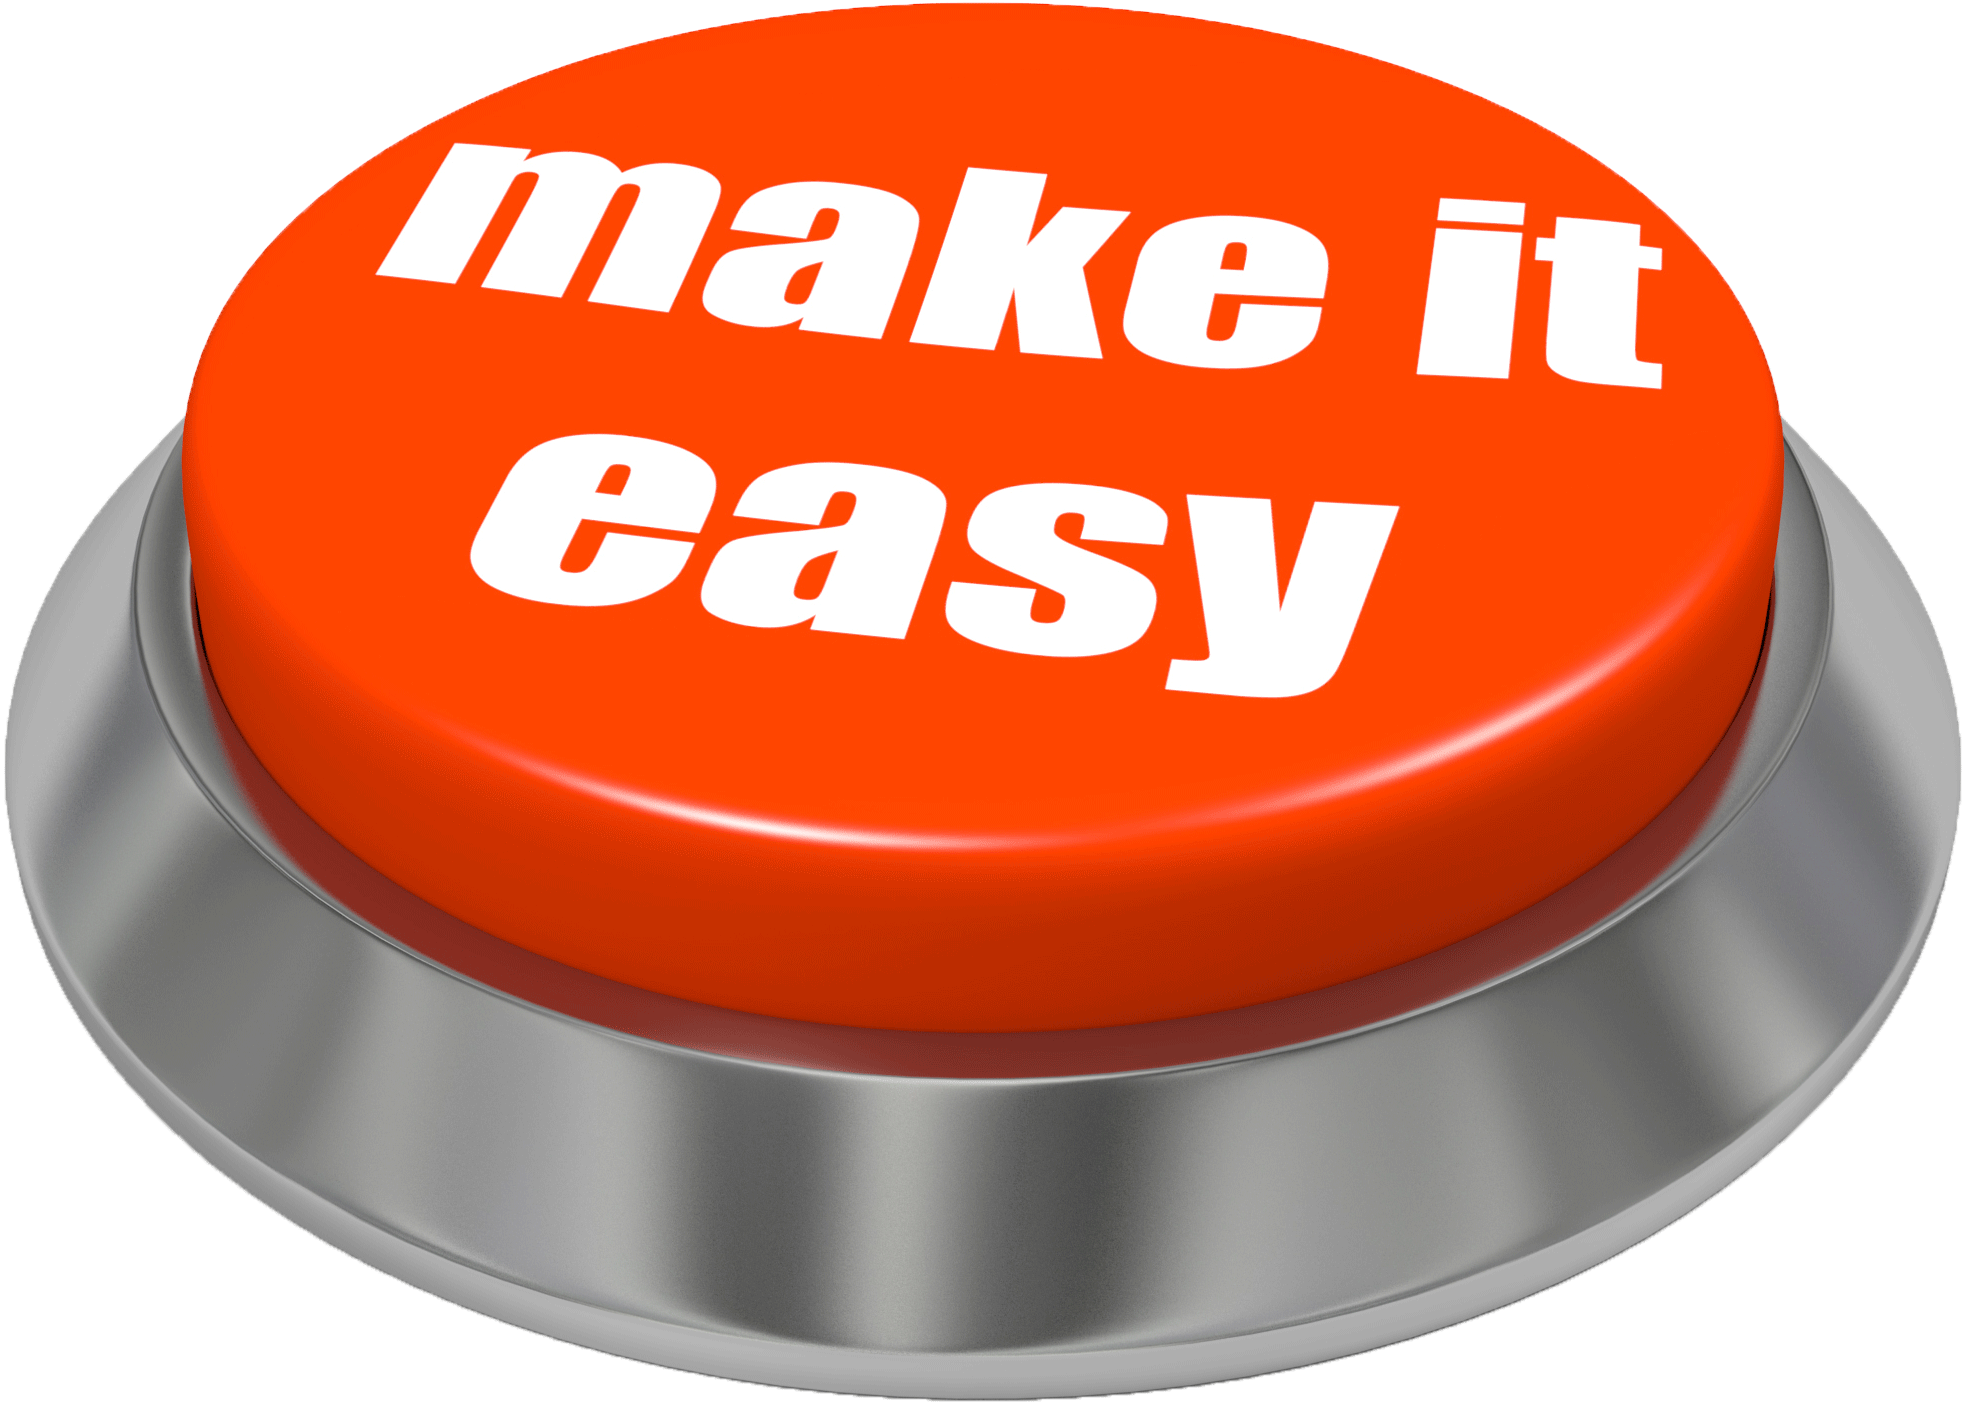 Easy easily. Make it easy. Кнопка that was easy. Эффект нажатия кнопки. Нажатая кнопка Push.